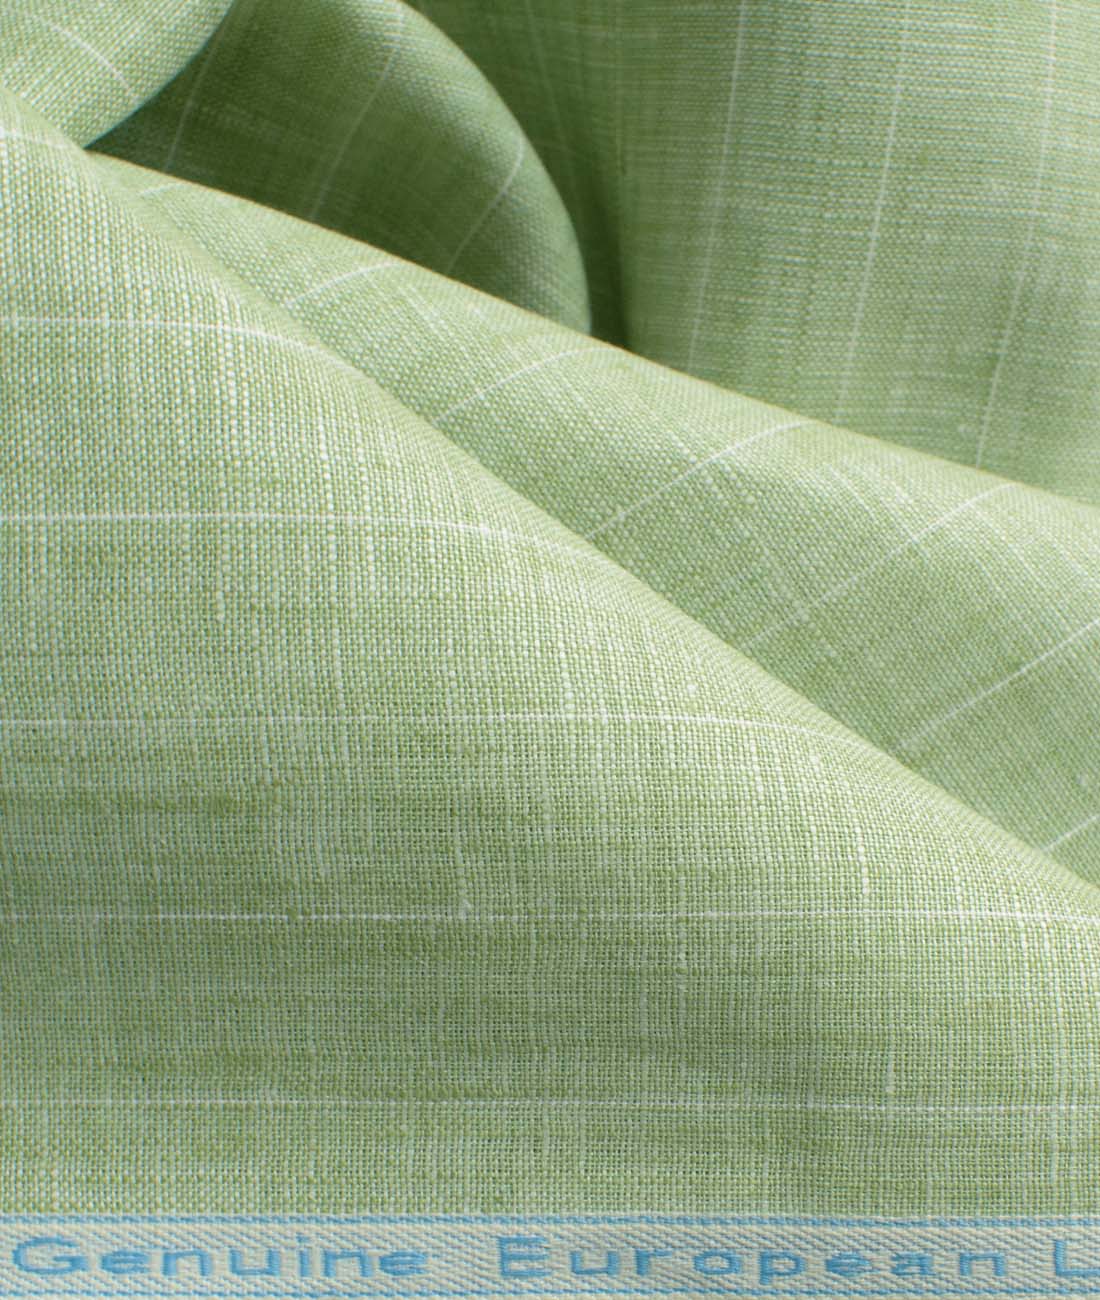 Linen Club Studio Pure Linen Green Solid Shirting Fabric